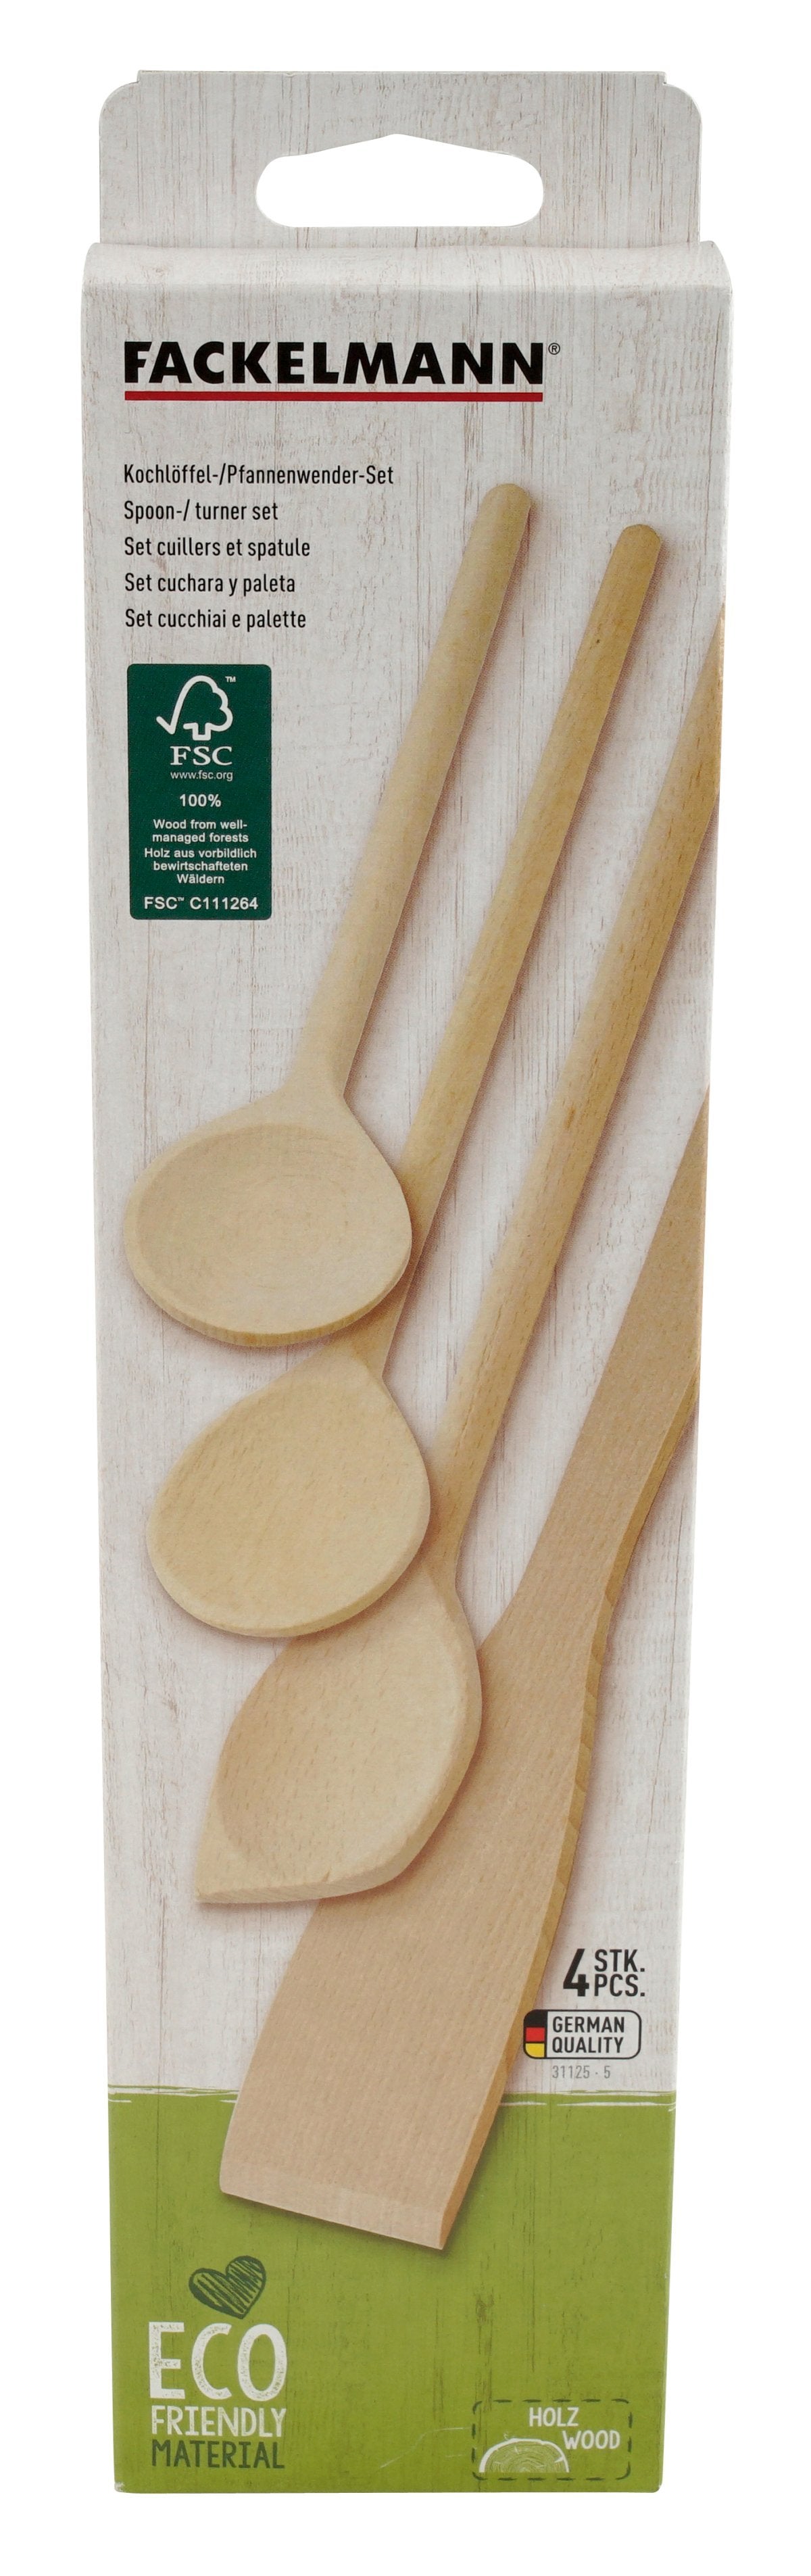 Fackelmann Nature Beech Wood Spoon/Turner Set, 4 pieces